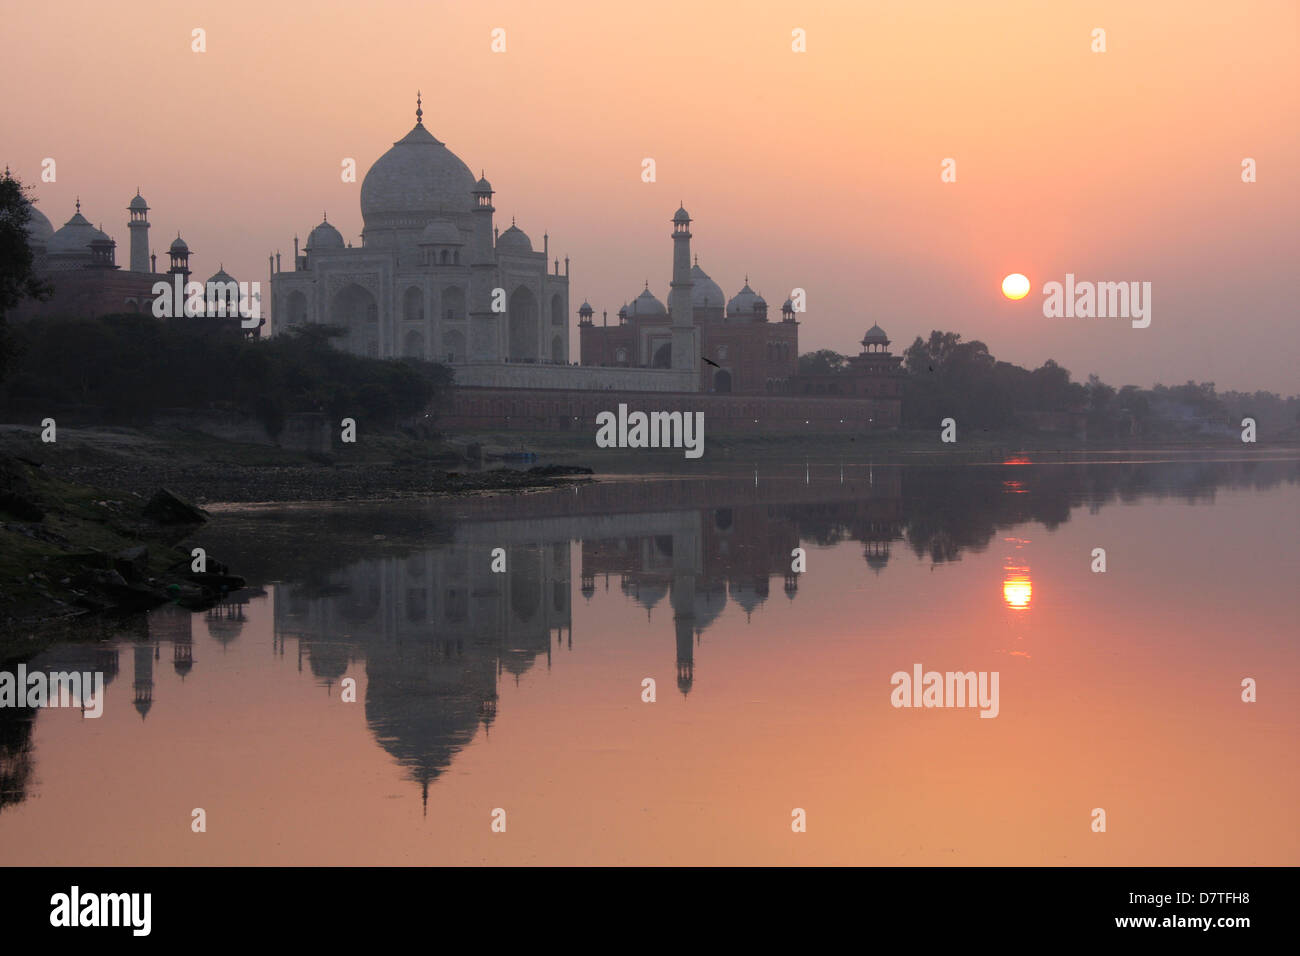 Taj Mahal reflected in Yamuna river at sunset, Agra, Uttar Pradesh, India Stock Photo